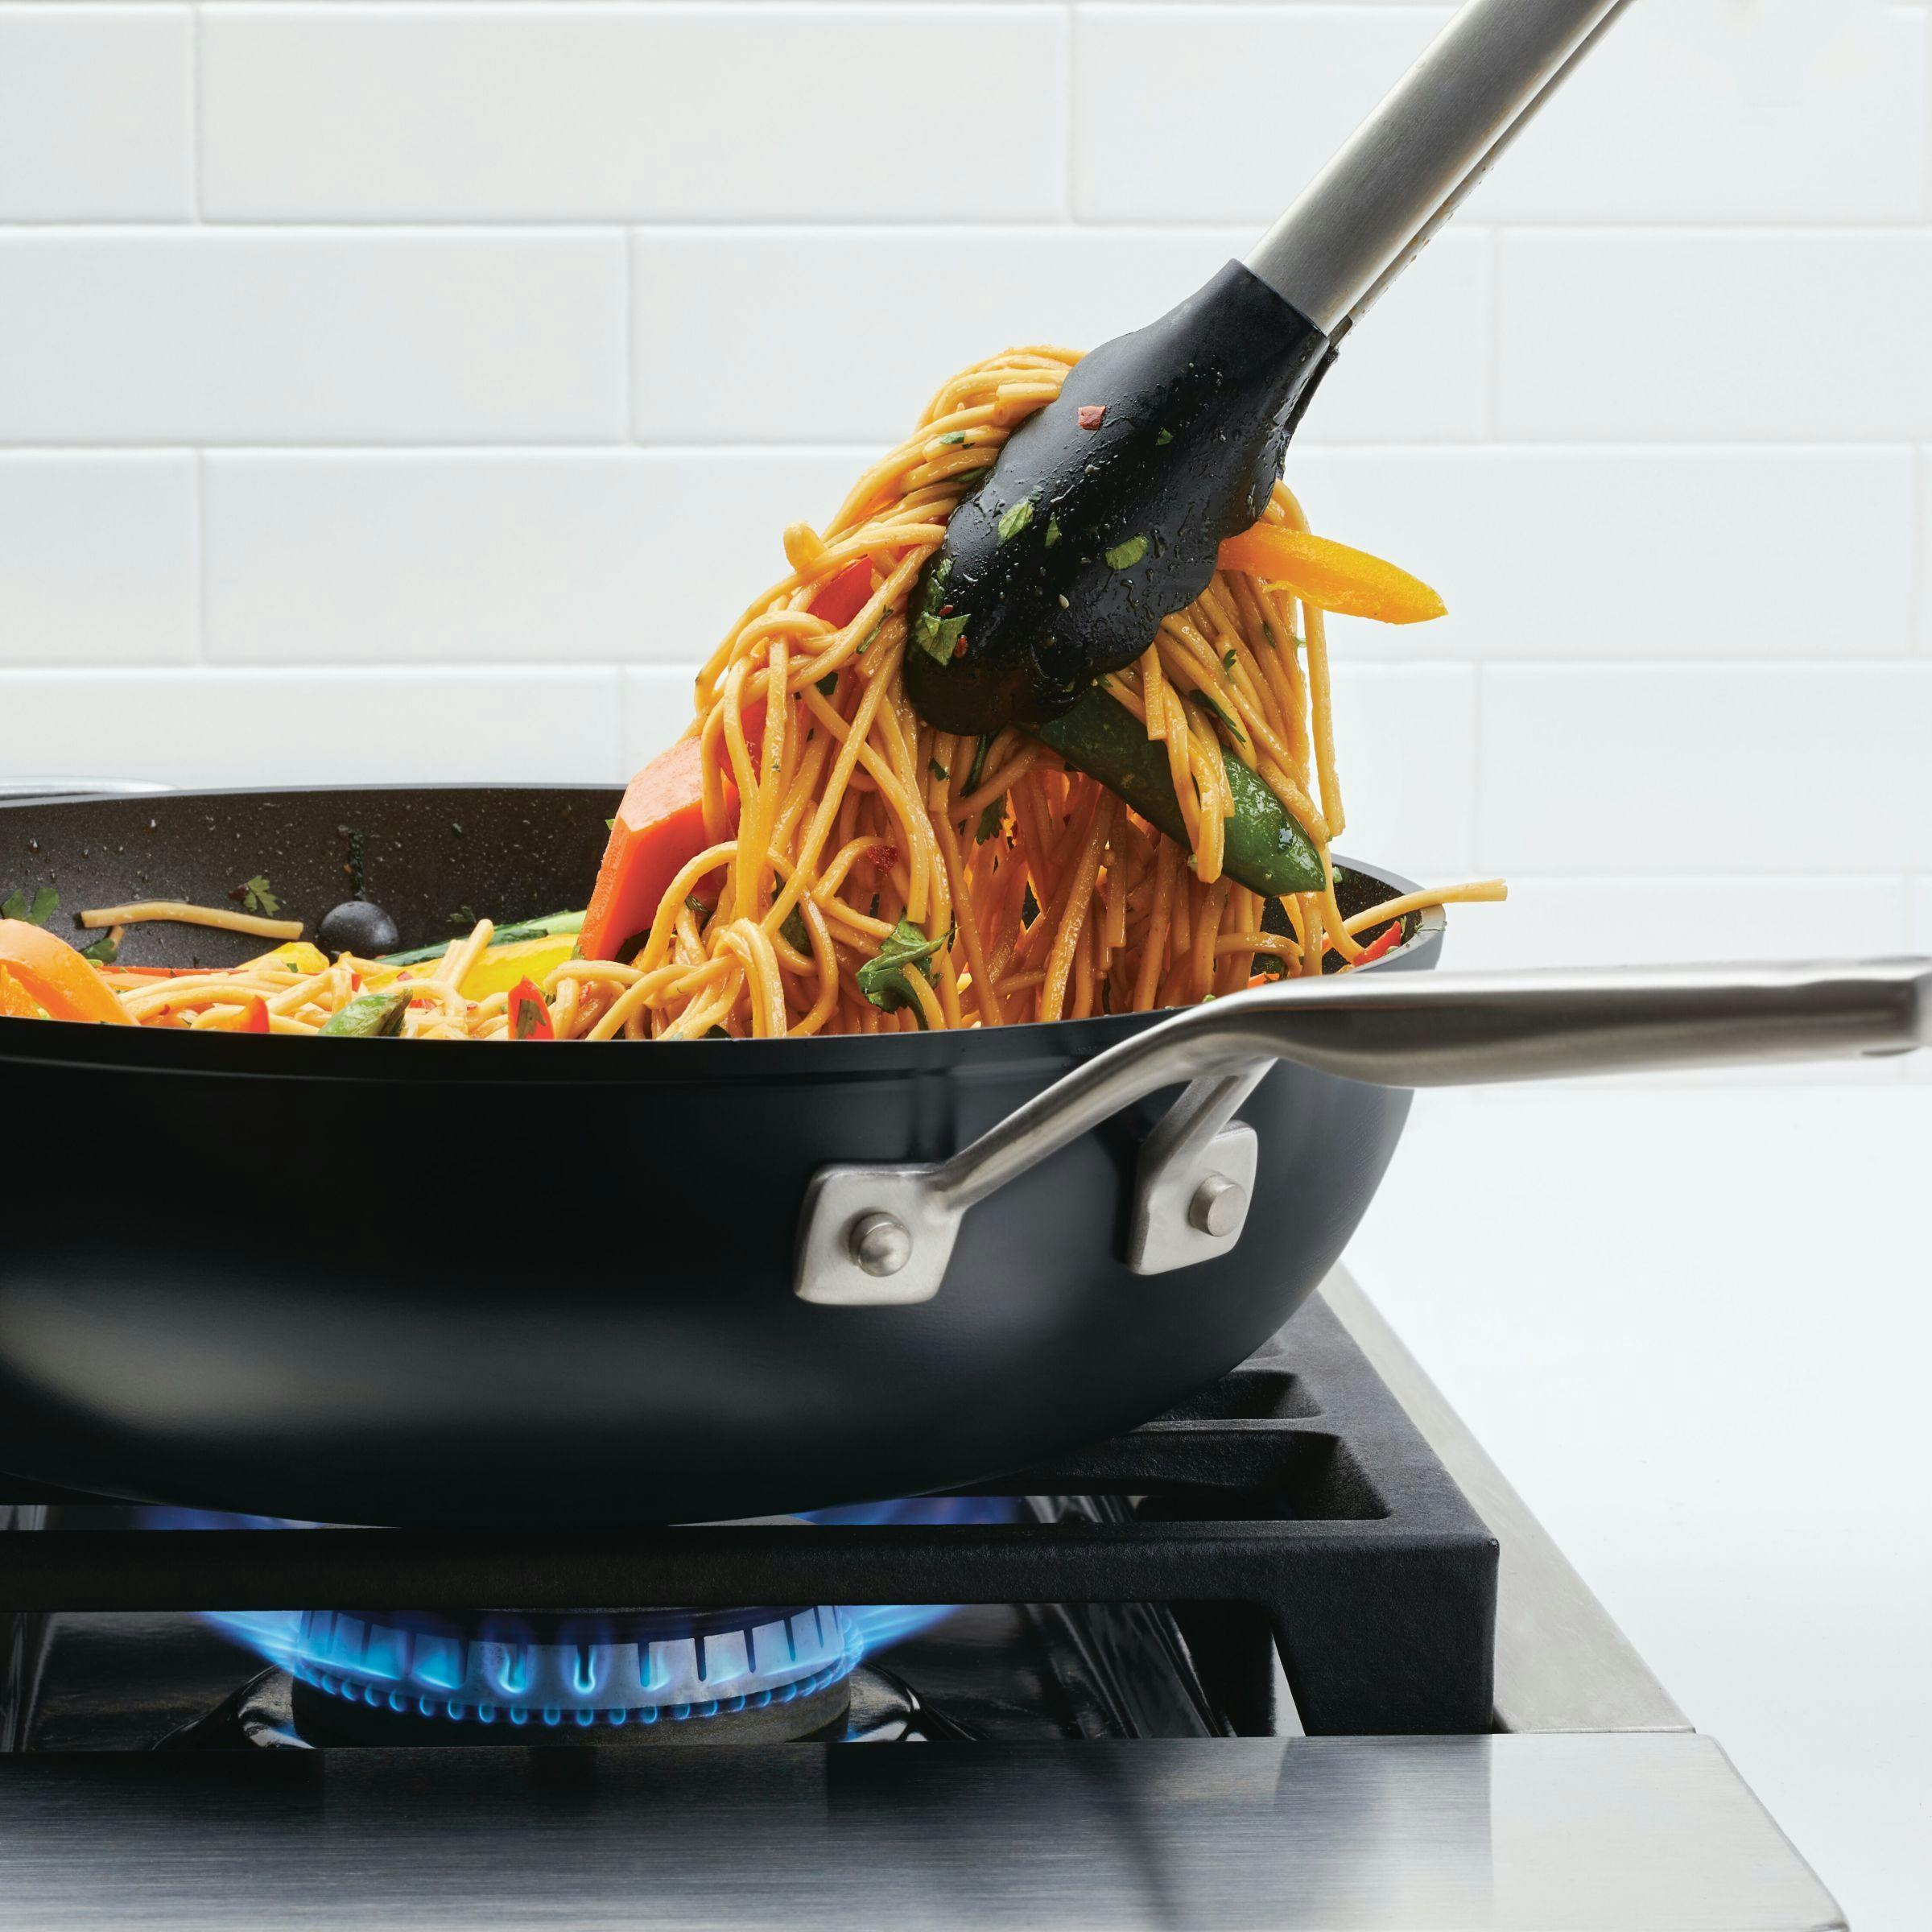 KitchenAid Hard-Anodized Induction Nonstick Stir Fry Pan / Wok with Helper Handle, 12.25-Inch, Matte Black